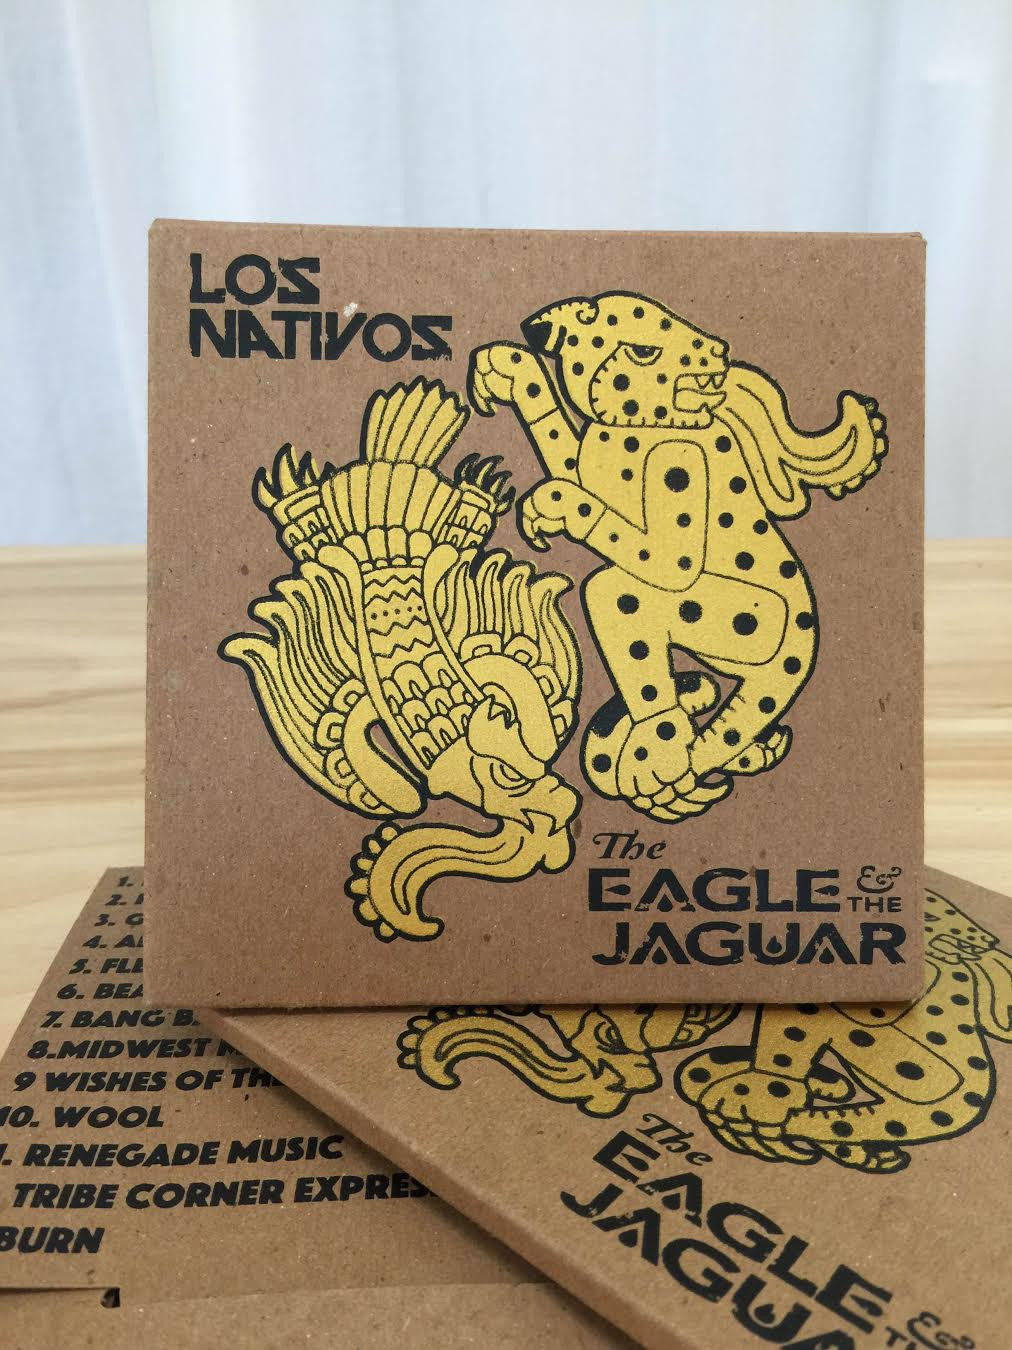 Los Nativos - The Eagle & the Jaguar